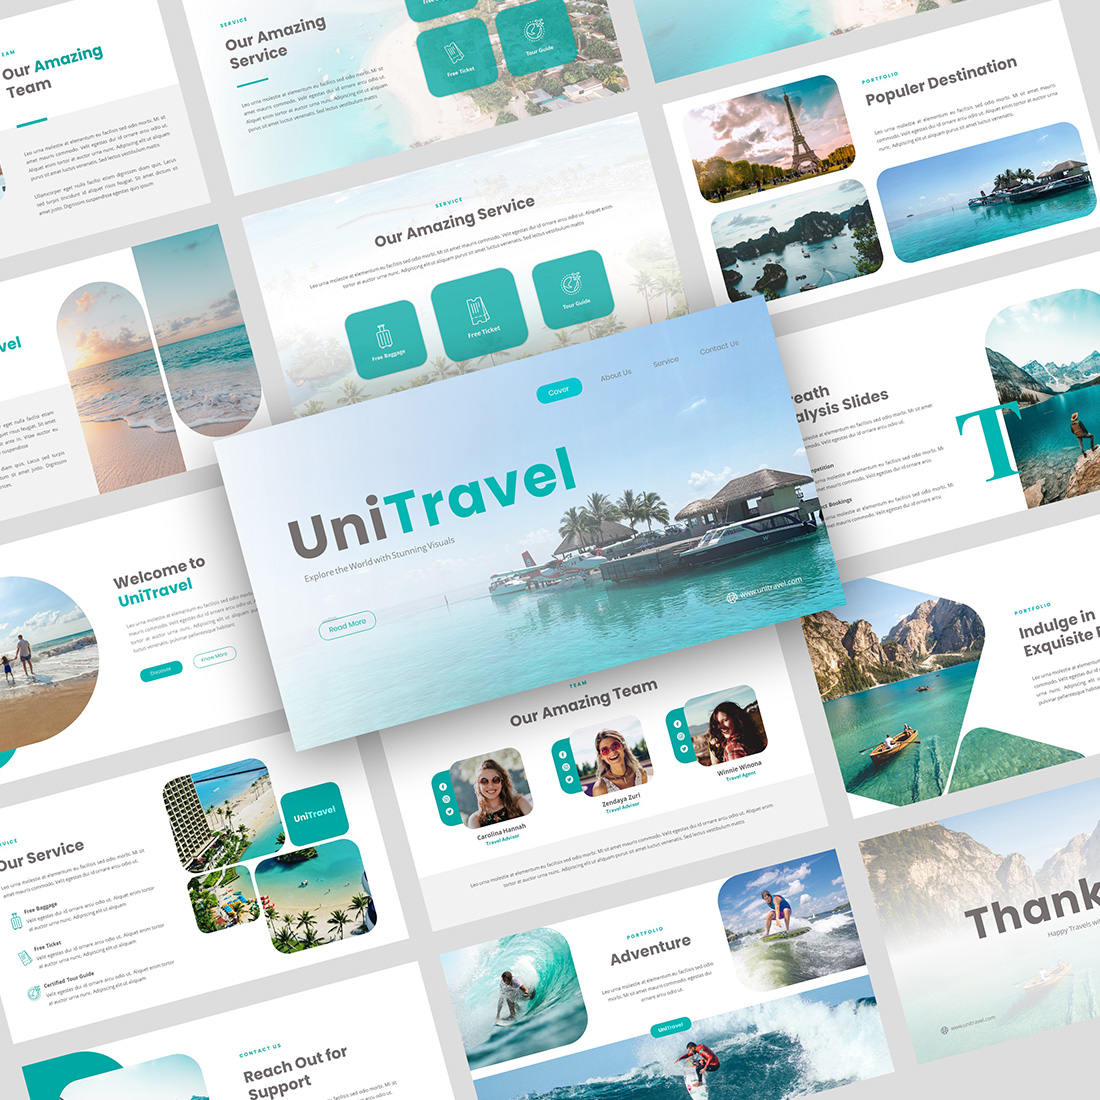 UniTravel-Travel Agency Google Slides Template cover image.